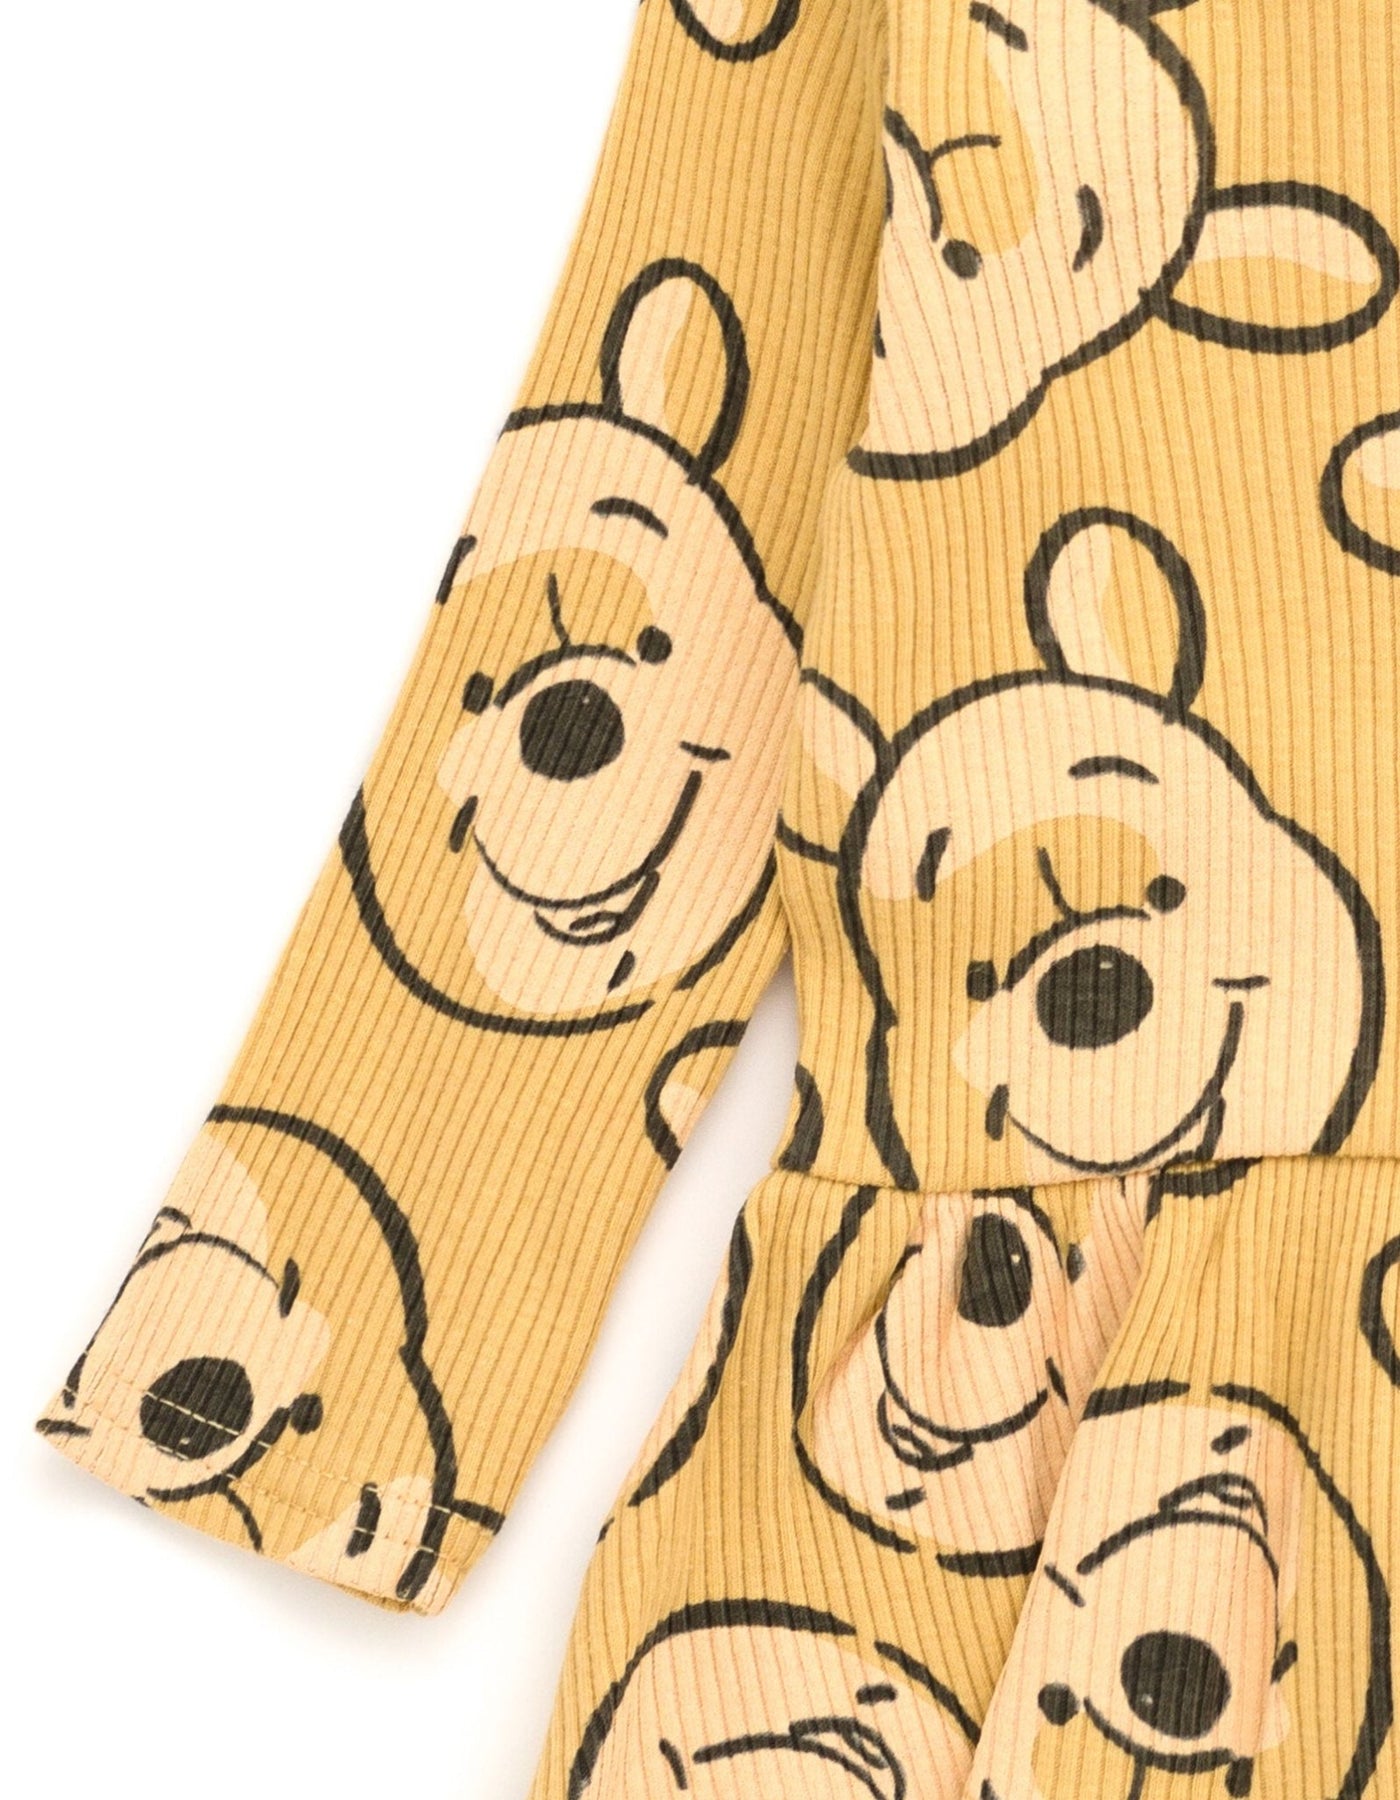 Disney Winnie the Pooh Peplum T-Shirt and Pants Outfit Set - imagikids